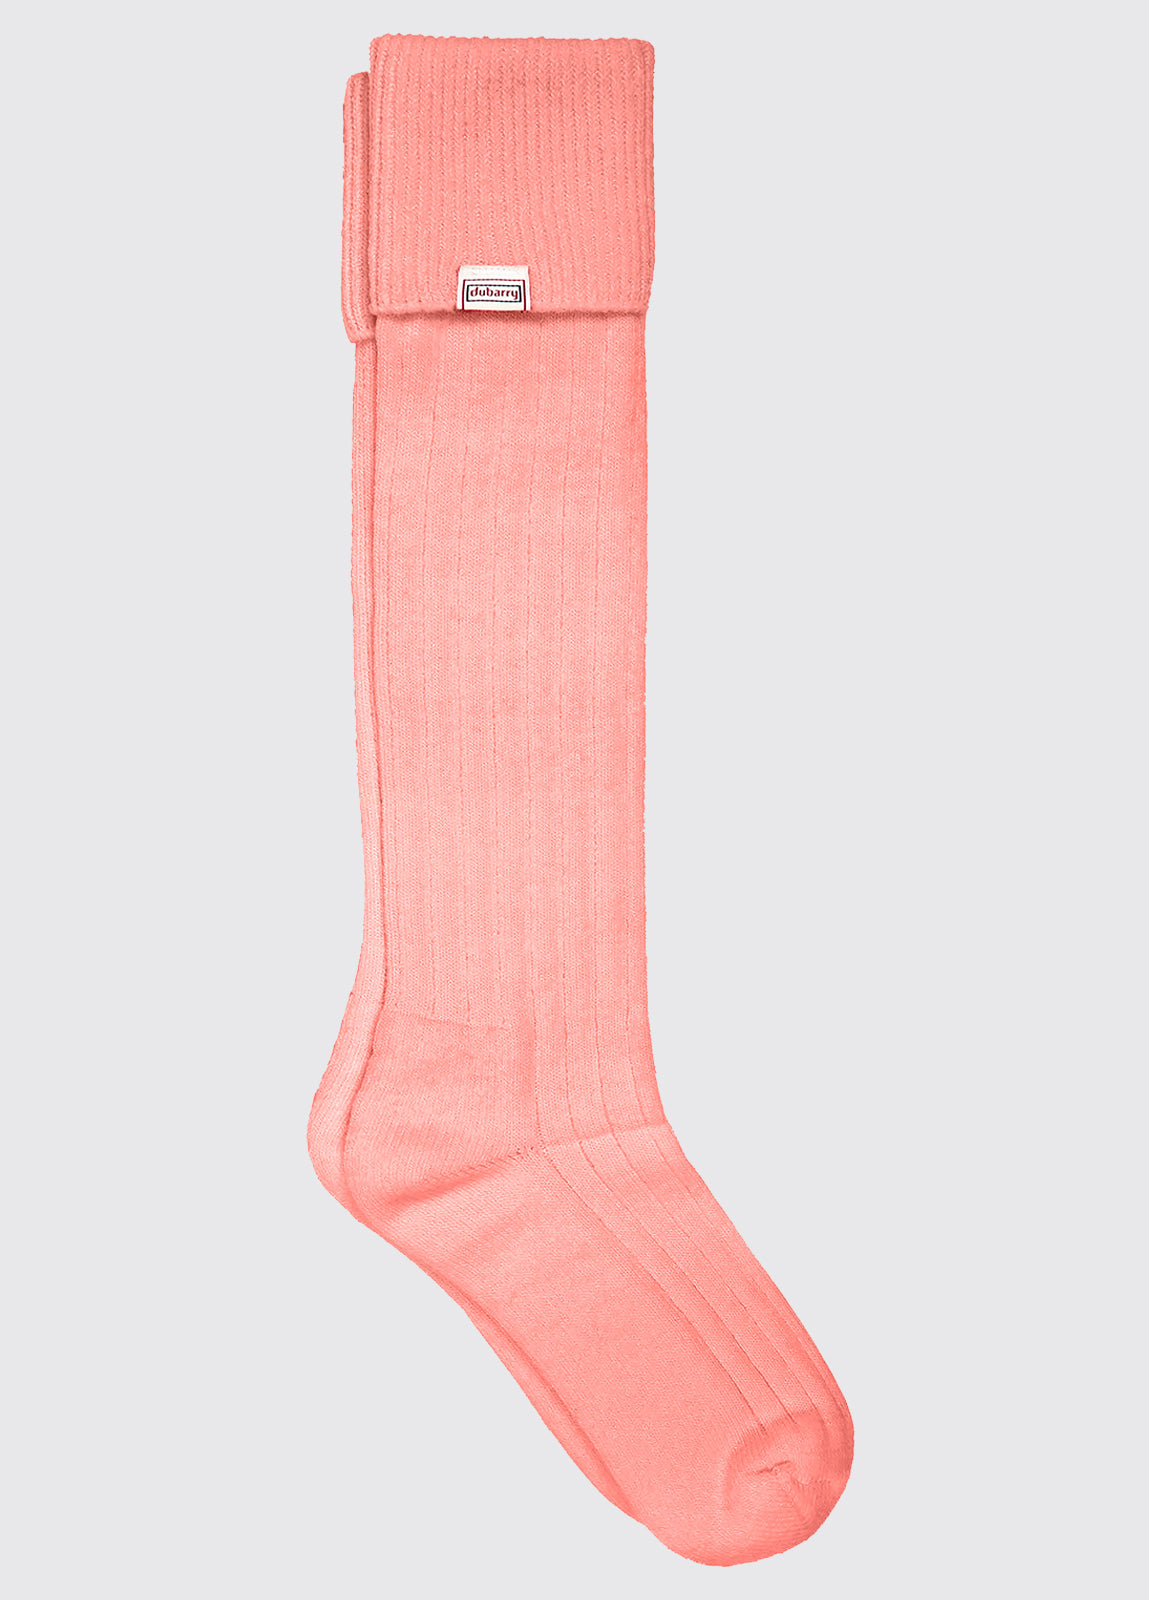 Dubarry of Ireland Alpaca Socks in Baby Pink